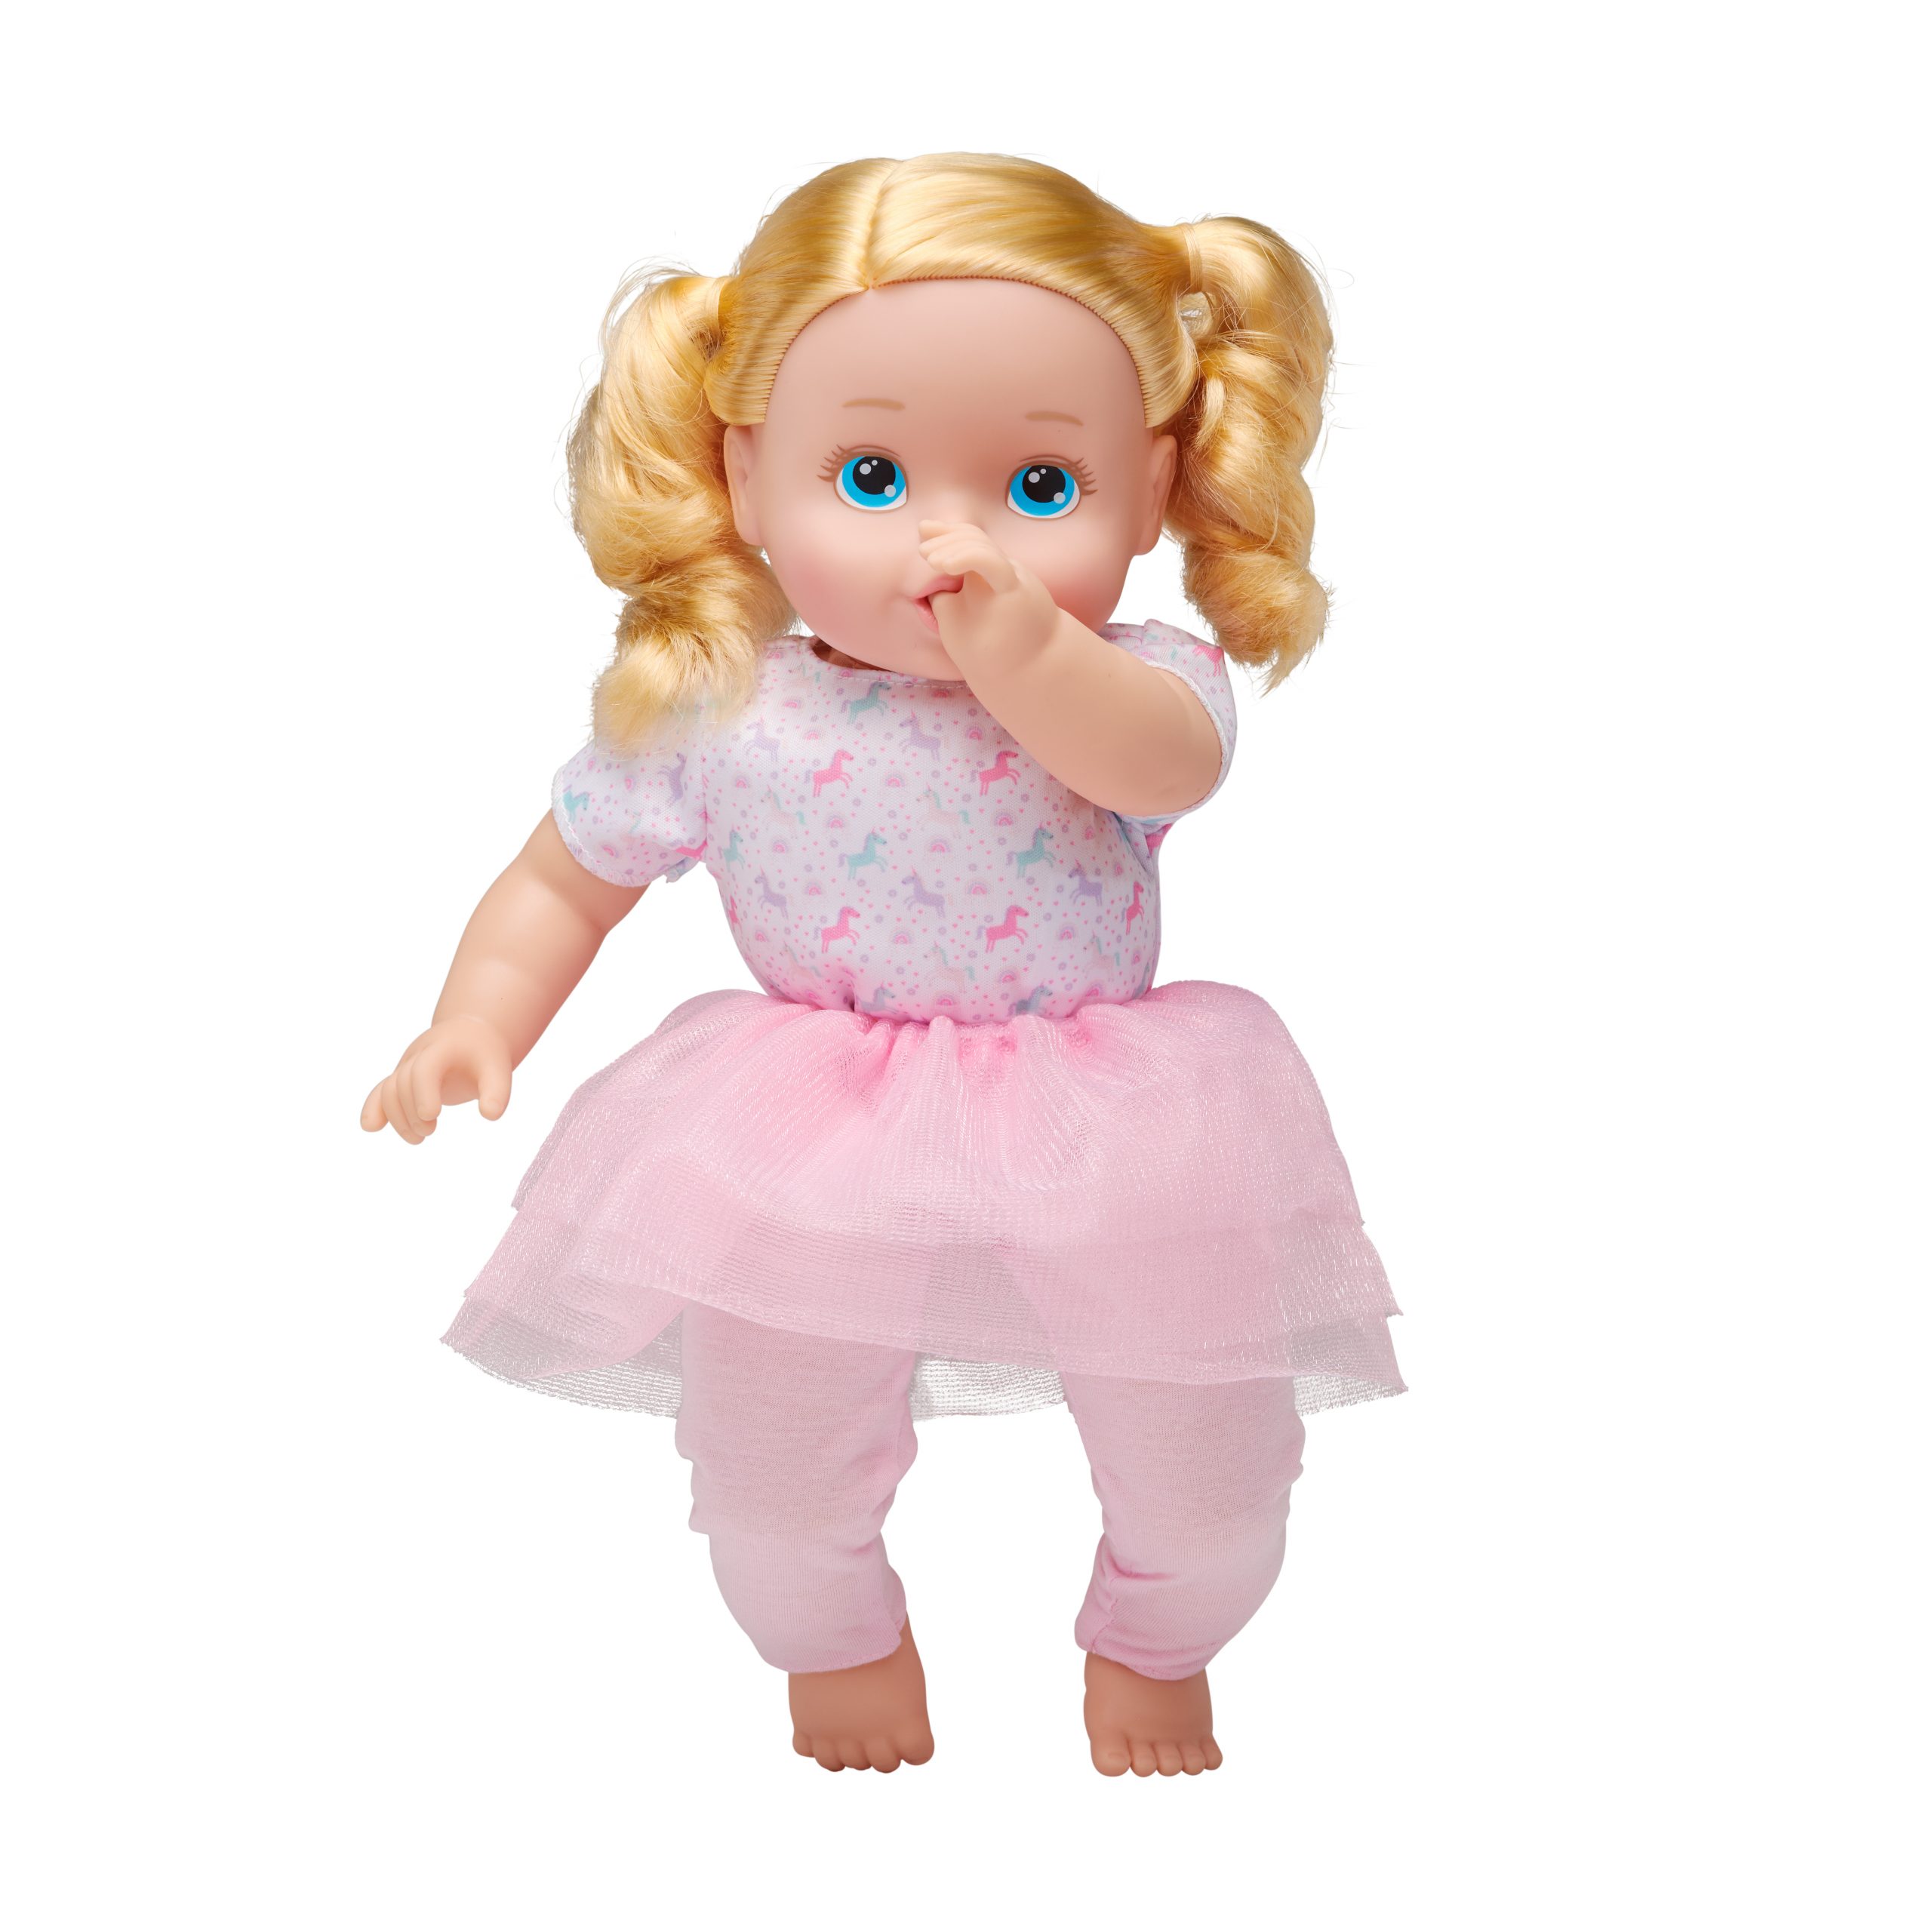 14" My Sweet Toddler Girl Doll Blonde - Blue Eyes